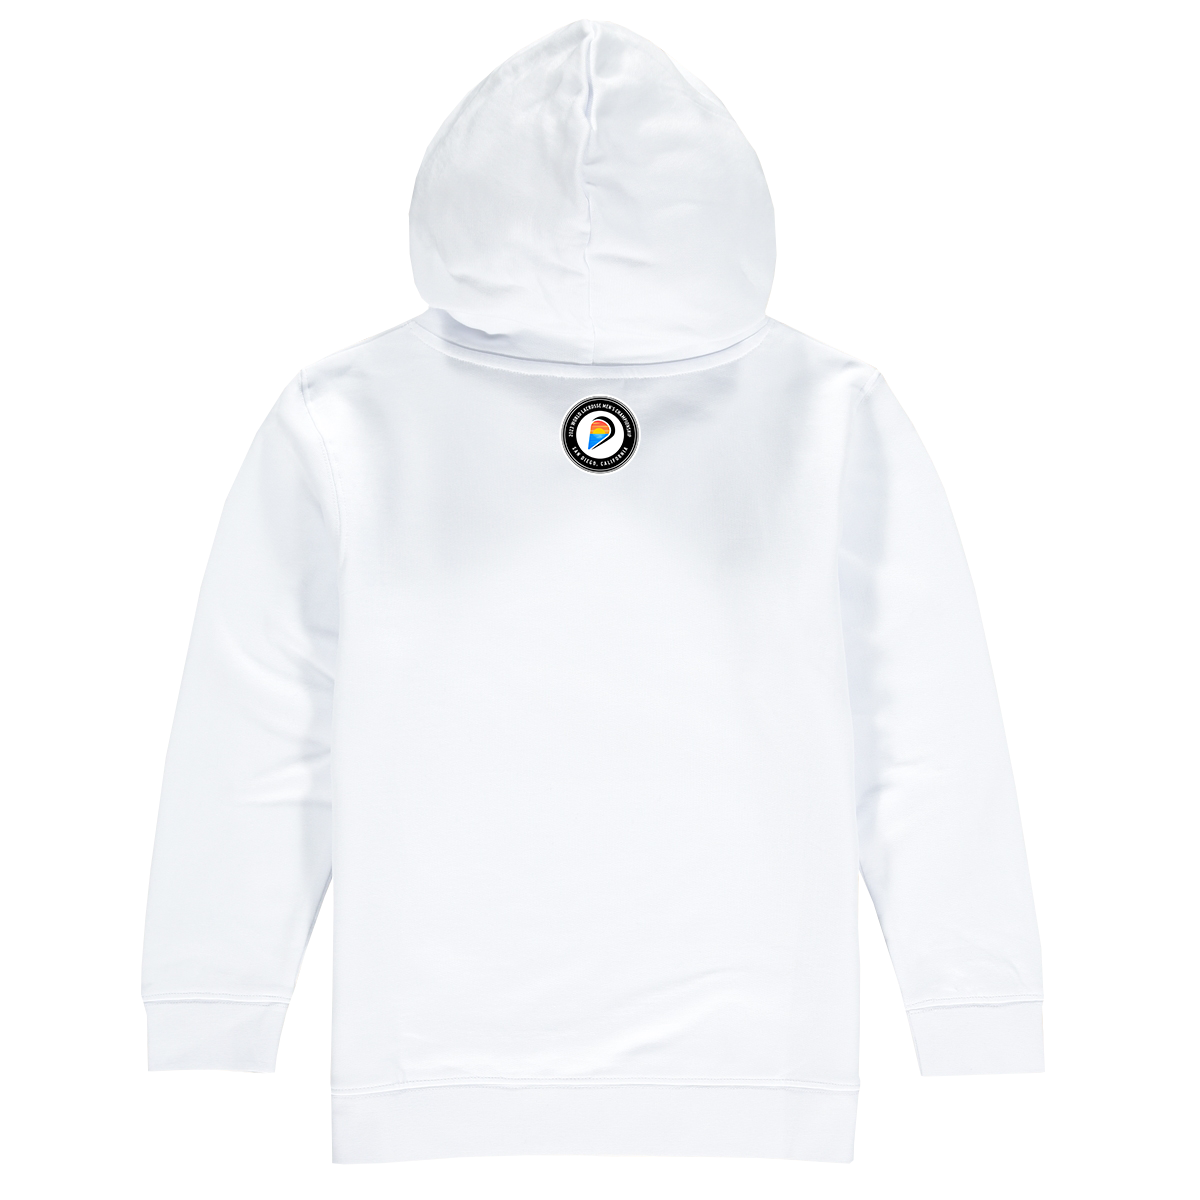 Denmark Premium Unisex Hoodie Sweatshirt White